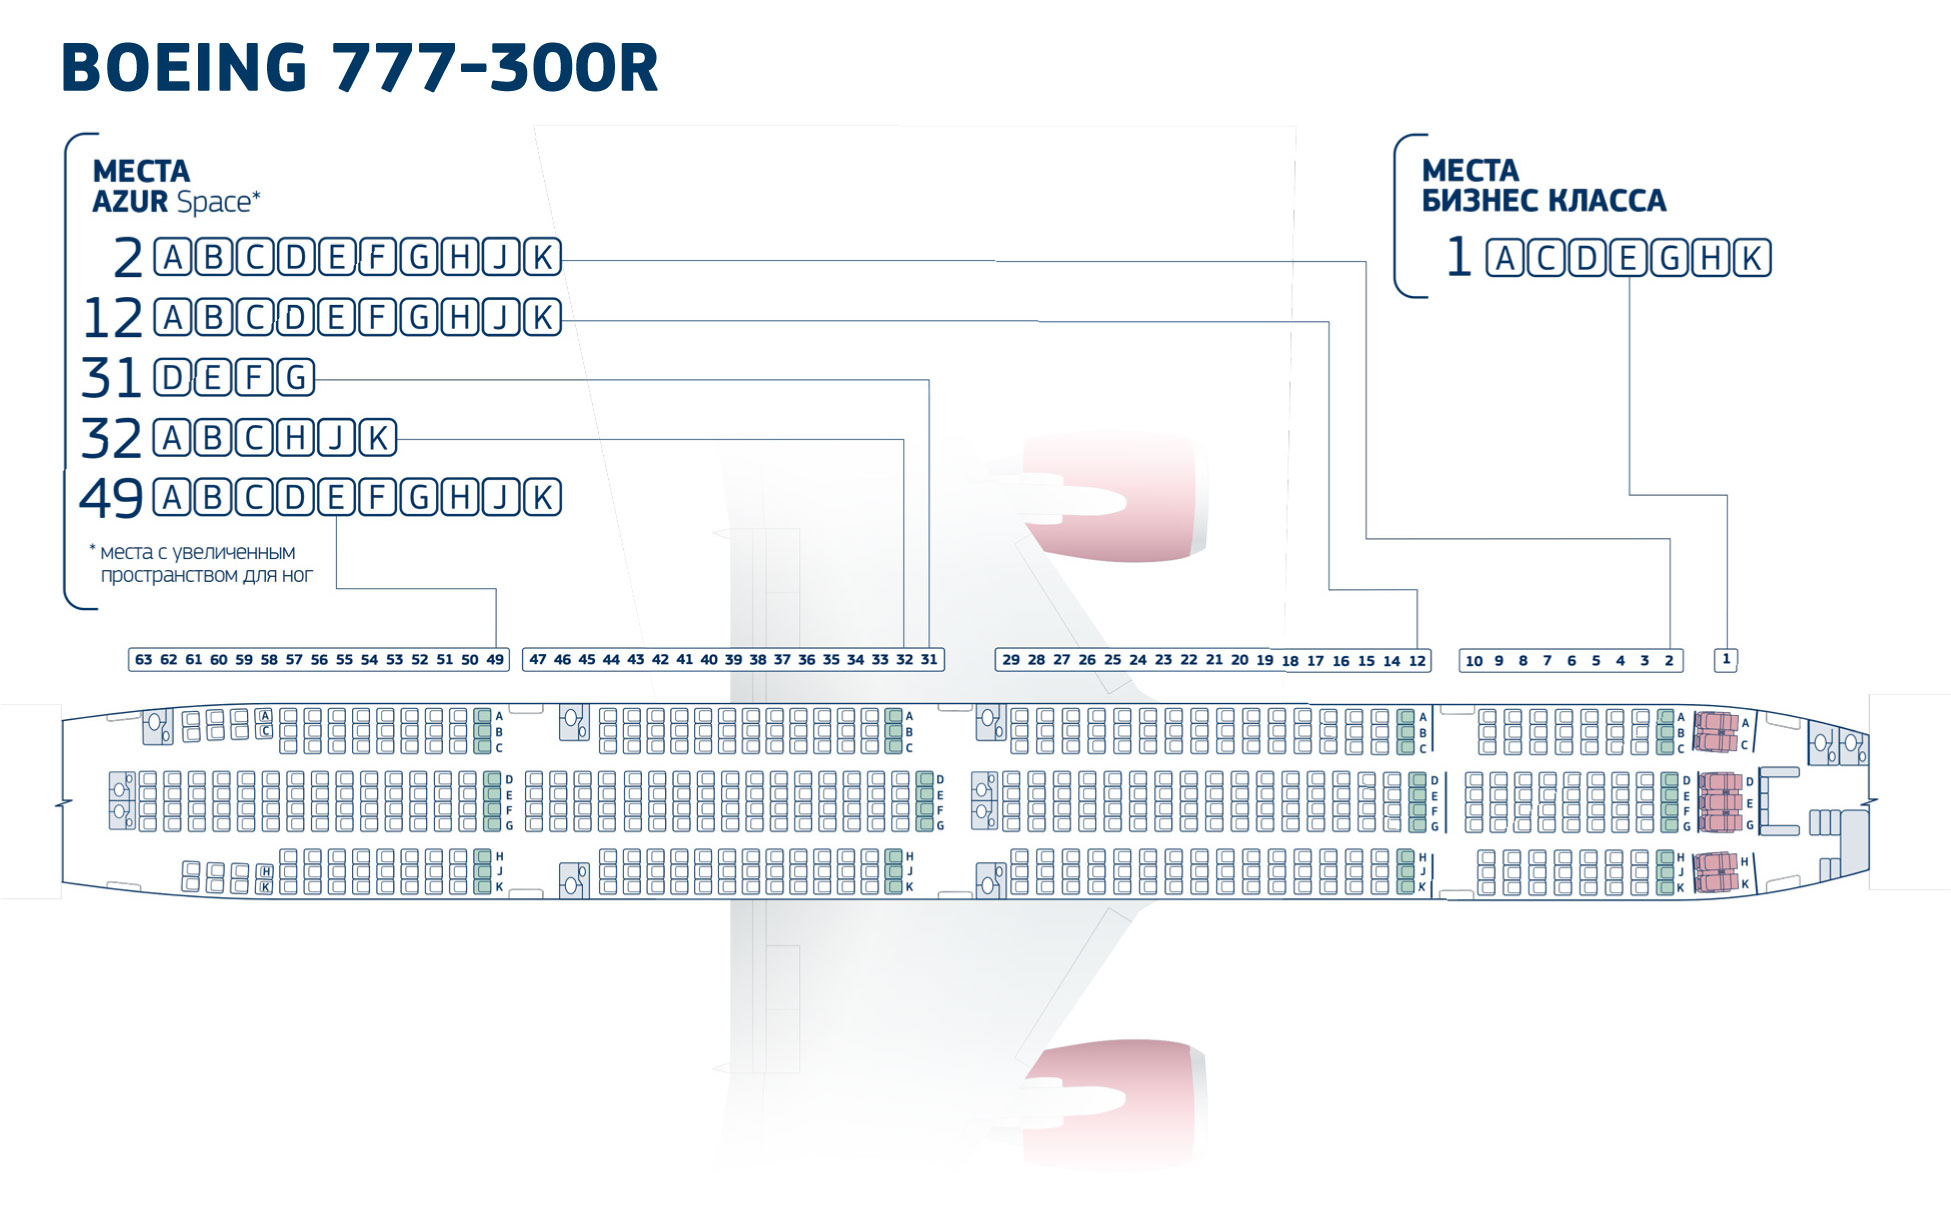 ООО «АЗУР эйр», + Наш воздушный флот: Boeing 777-300ER